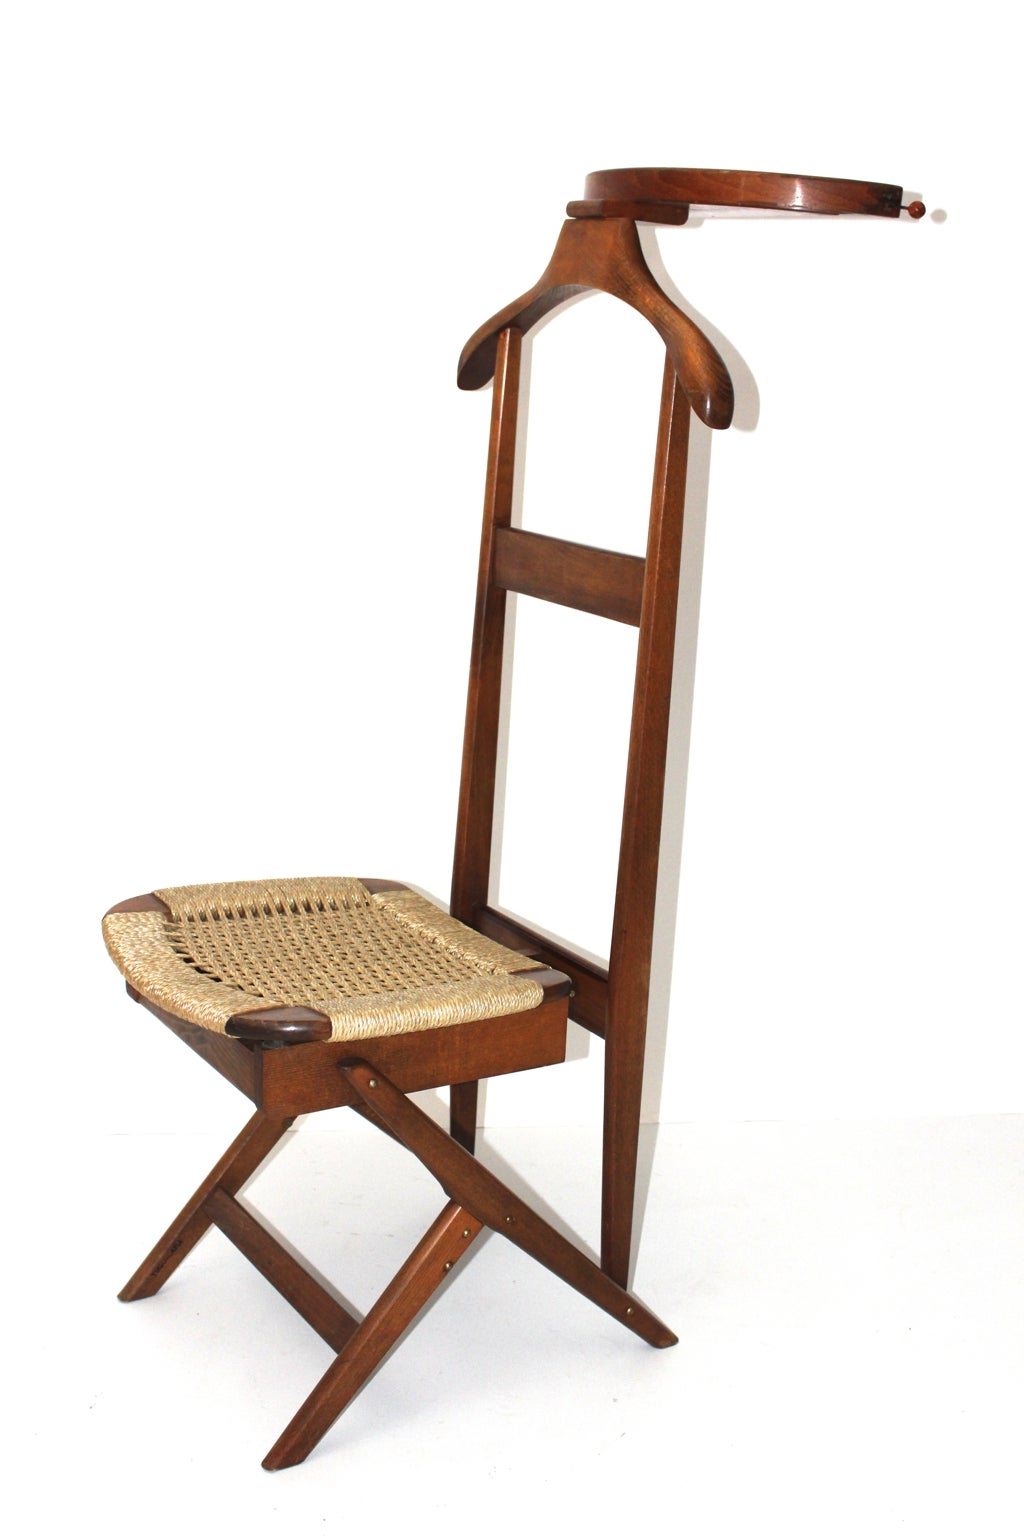 Mid-20th Century Mid Century Modern Beechwood Valet Chair by Ico & Luisa Parisi, Italy 1950s